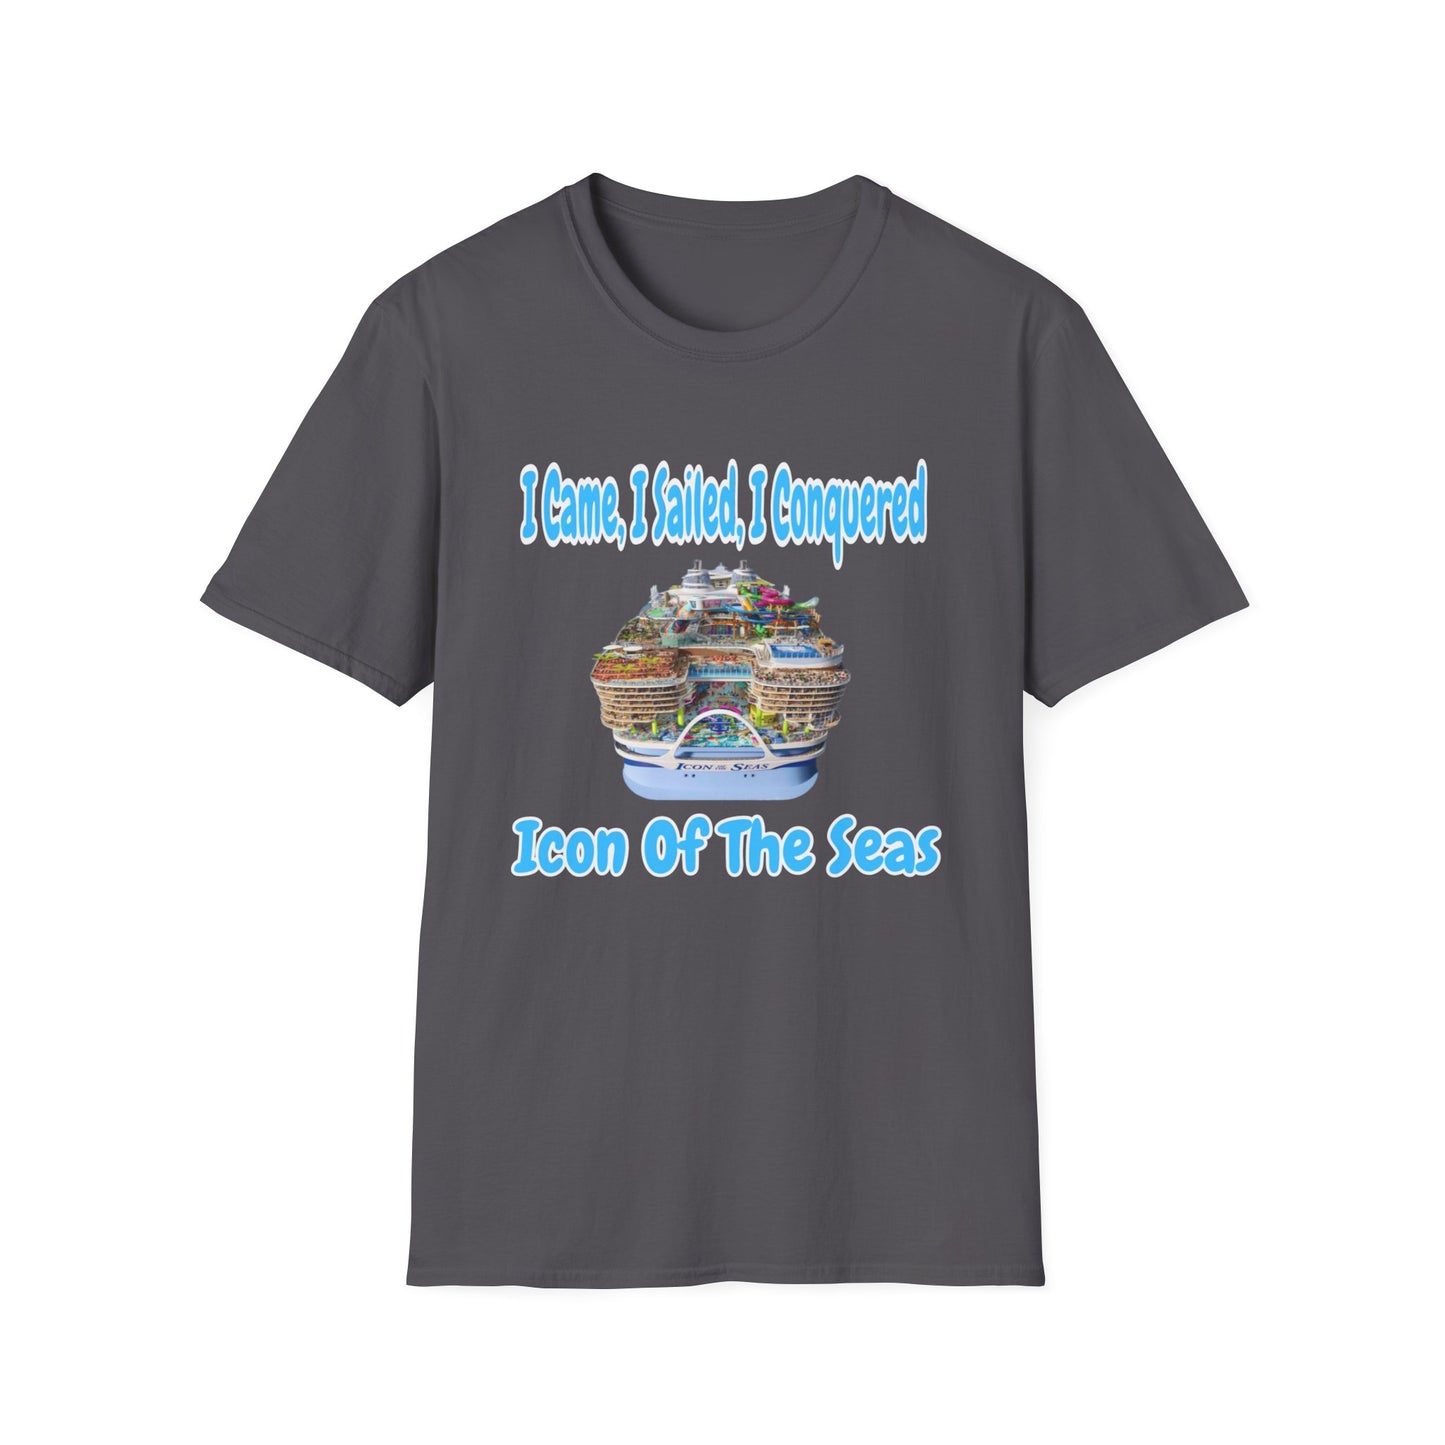 Icon of the Seas I Came, I Sailed, I Conquered Unisex Soft style T-Shirt